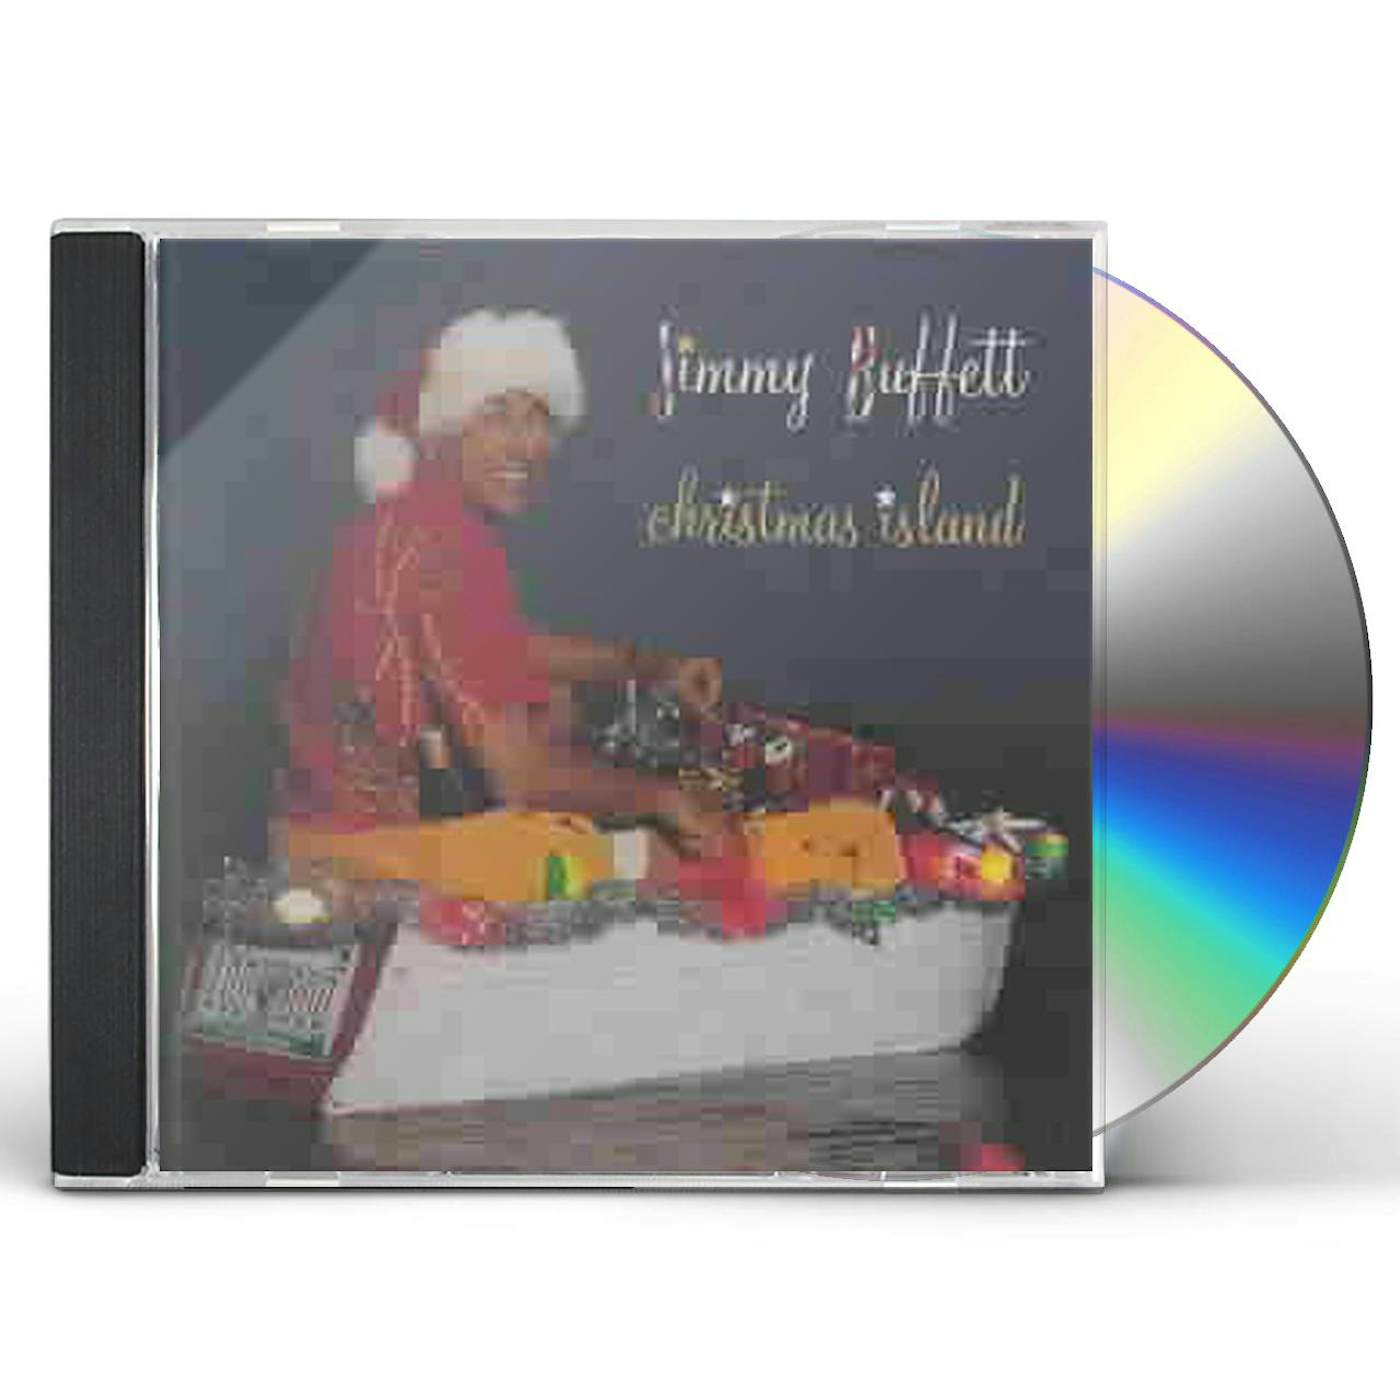 Jimmy Buffett CHRISTMAS ISLAND CD